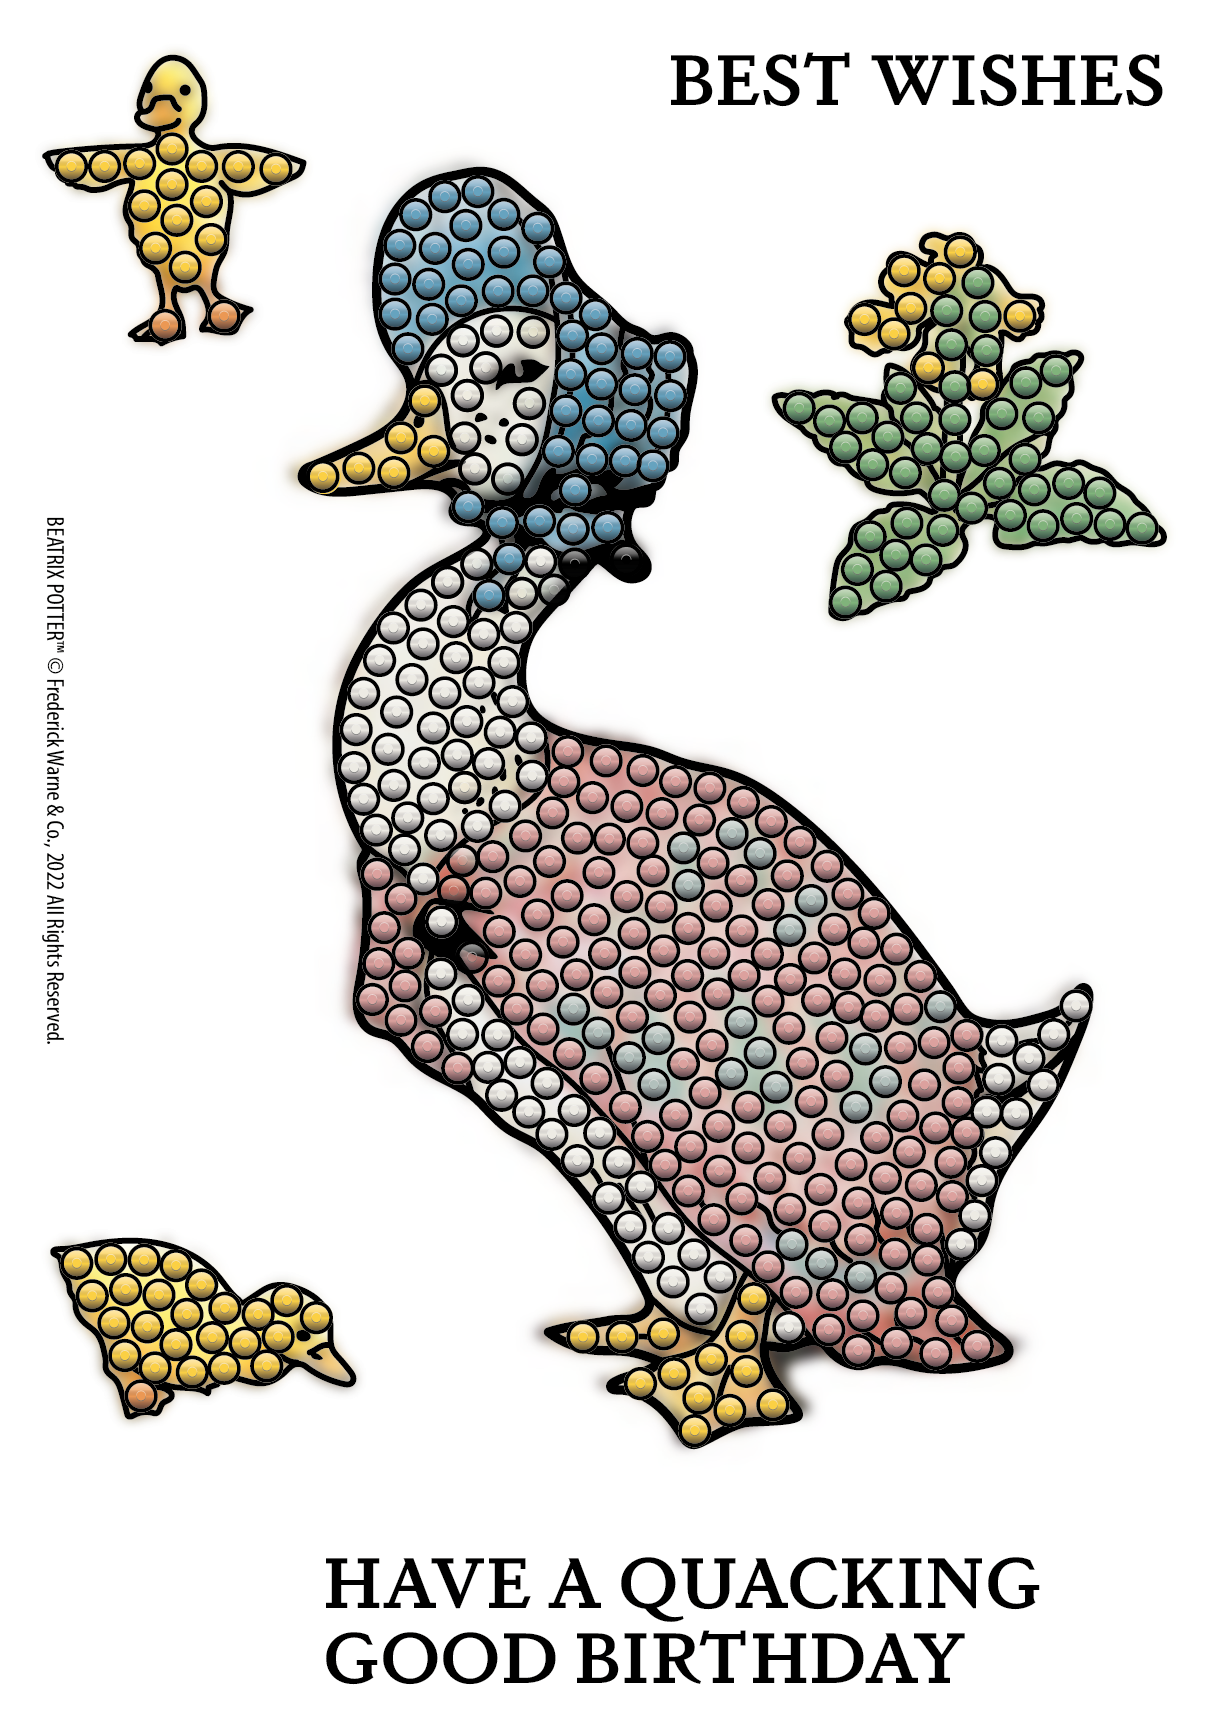 CCST-PR02: Peter Rabbit Crystal Art A6 Stamp Set - Jemima Puddle-Duck